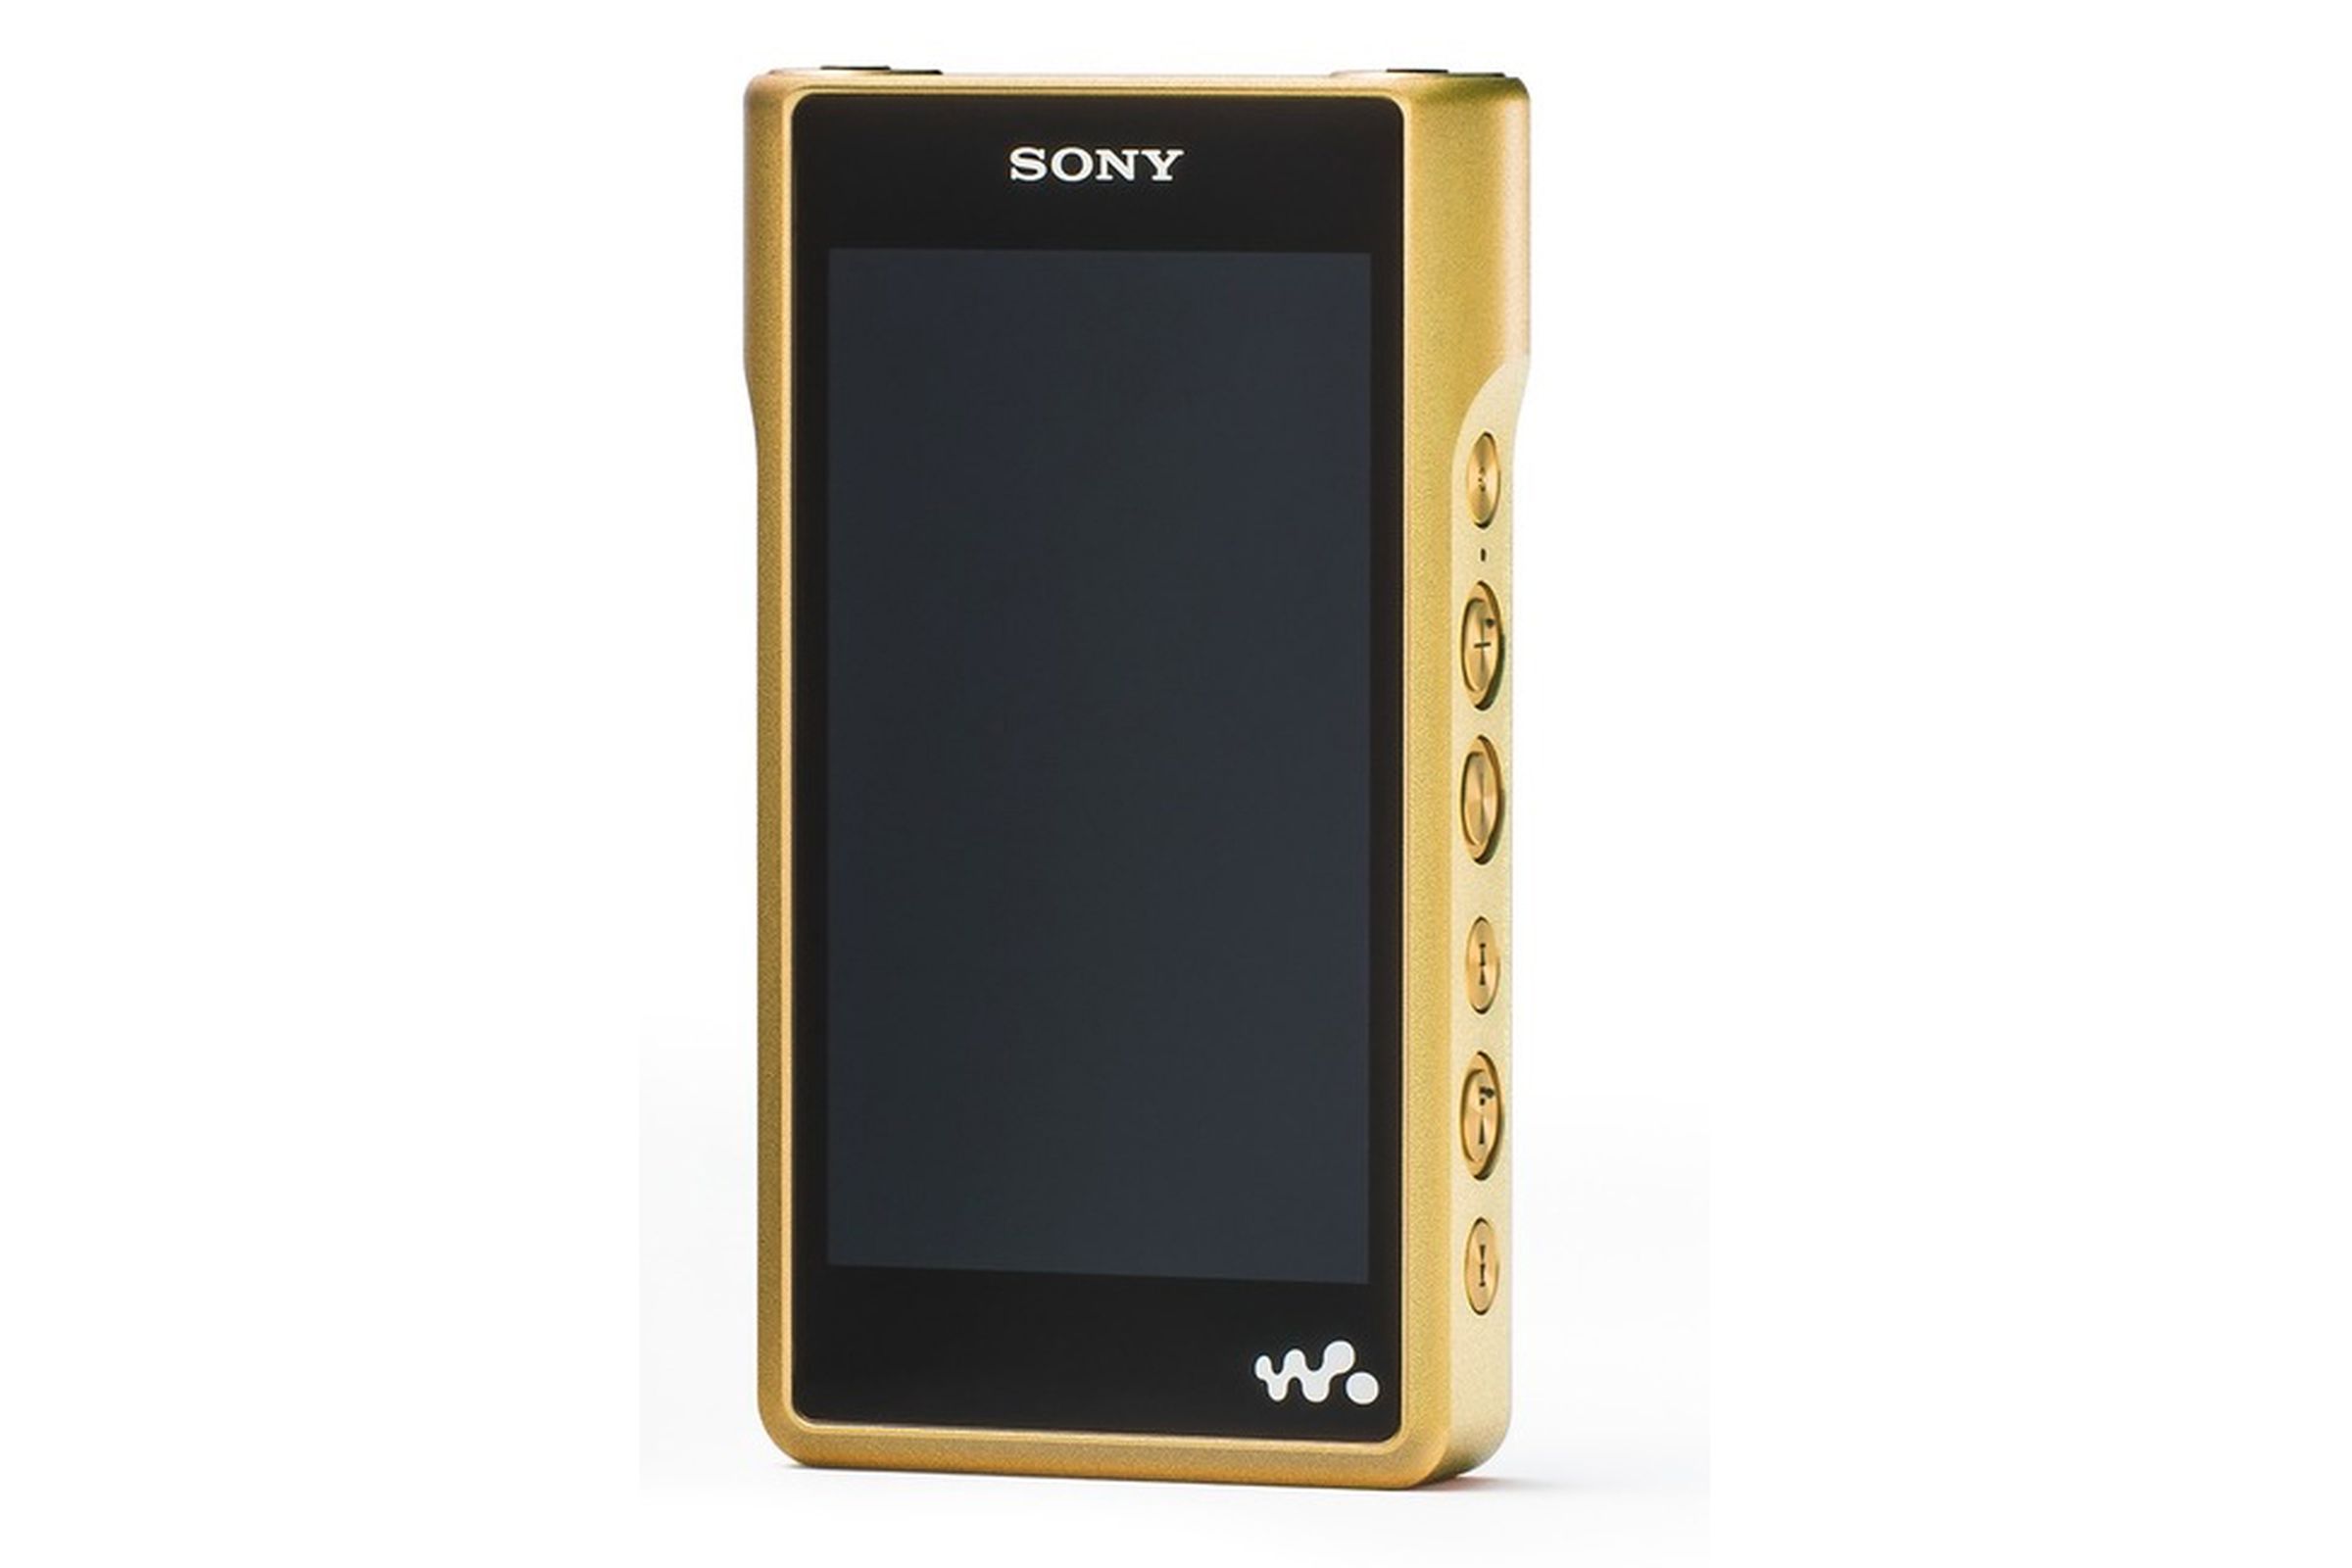 Sony's gold-plated Walkman